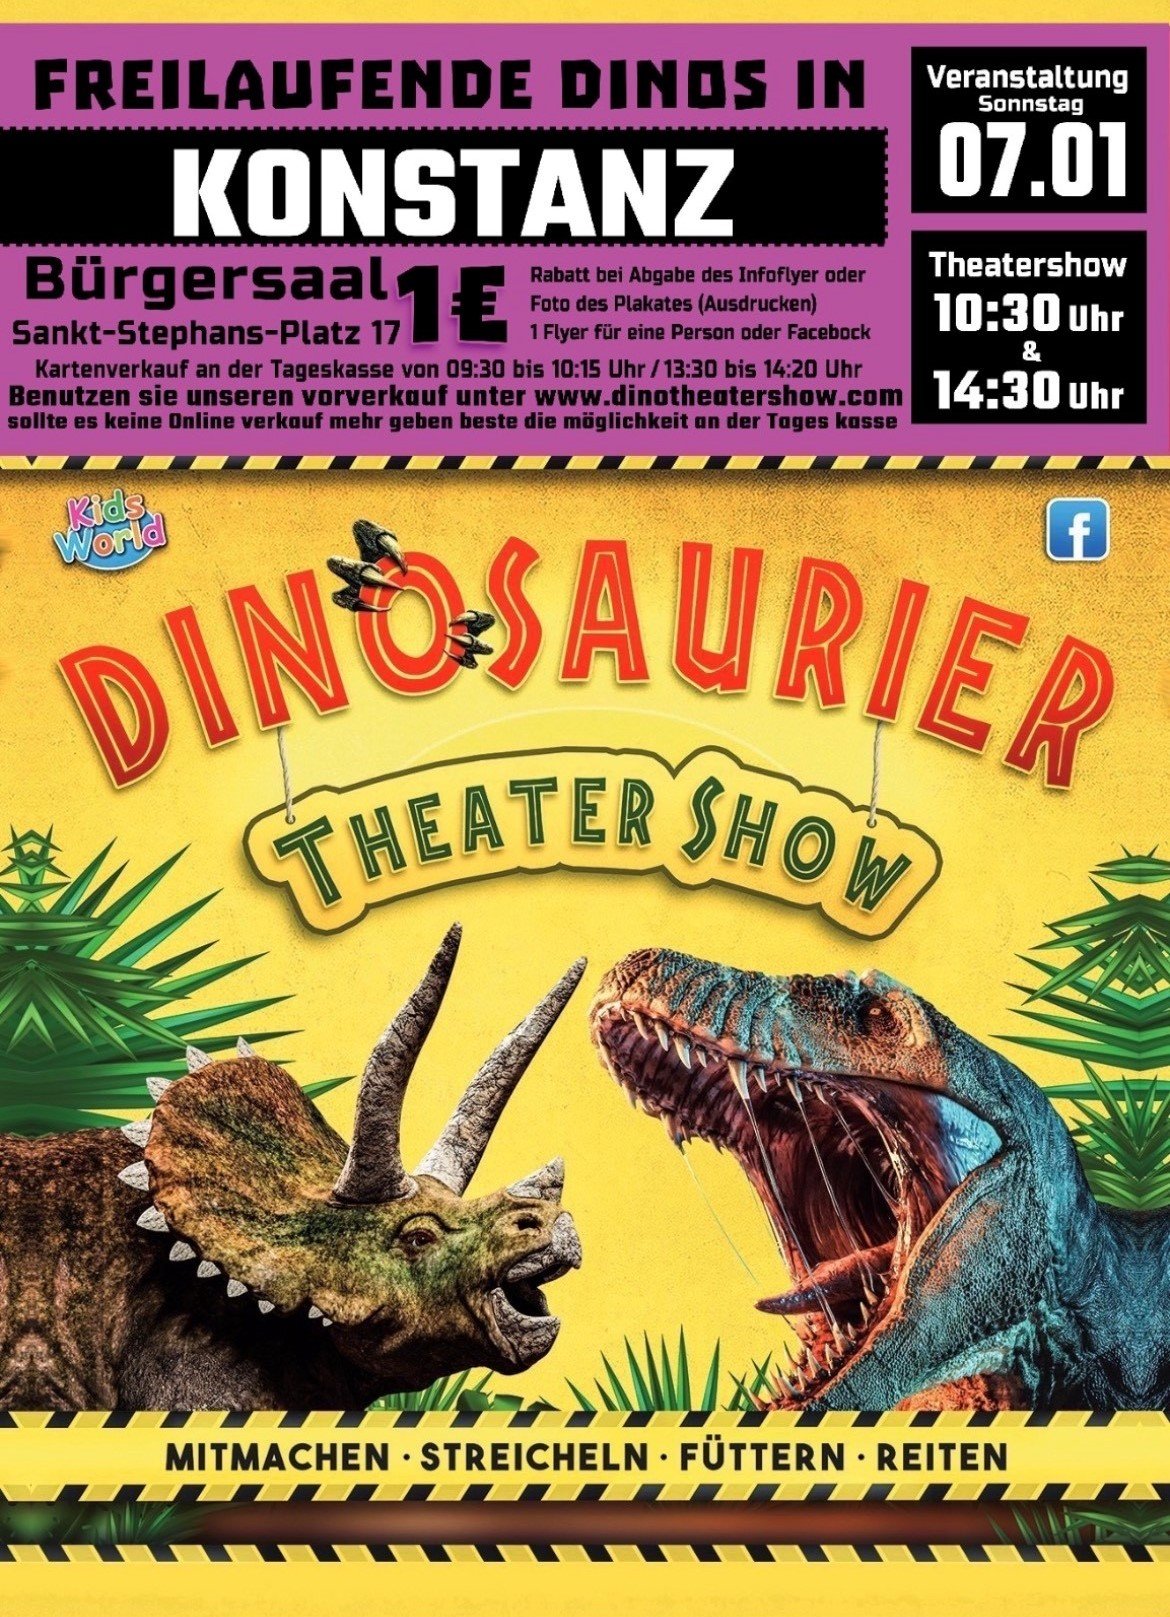 Dino Theater Show in Konstanz